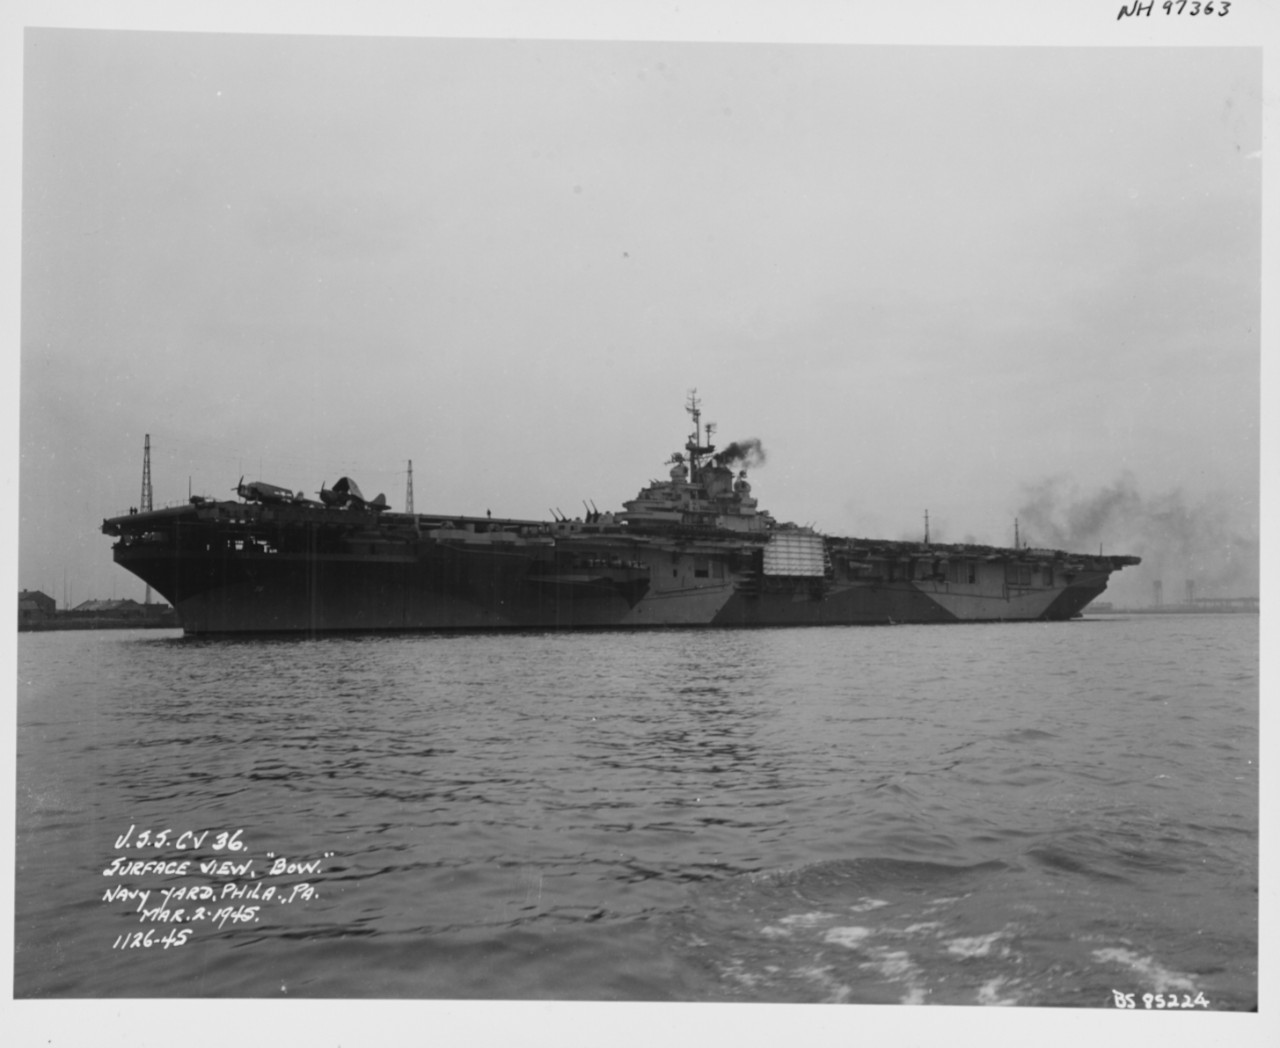 Photo #: NH 97363  USS Antietam (CV-36)